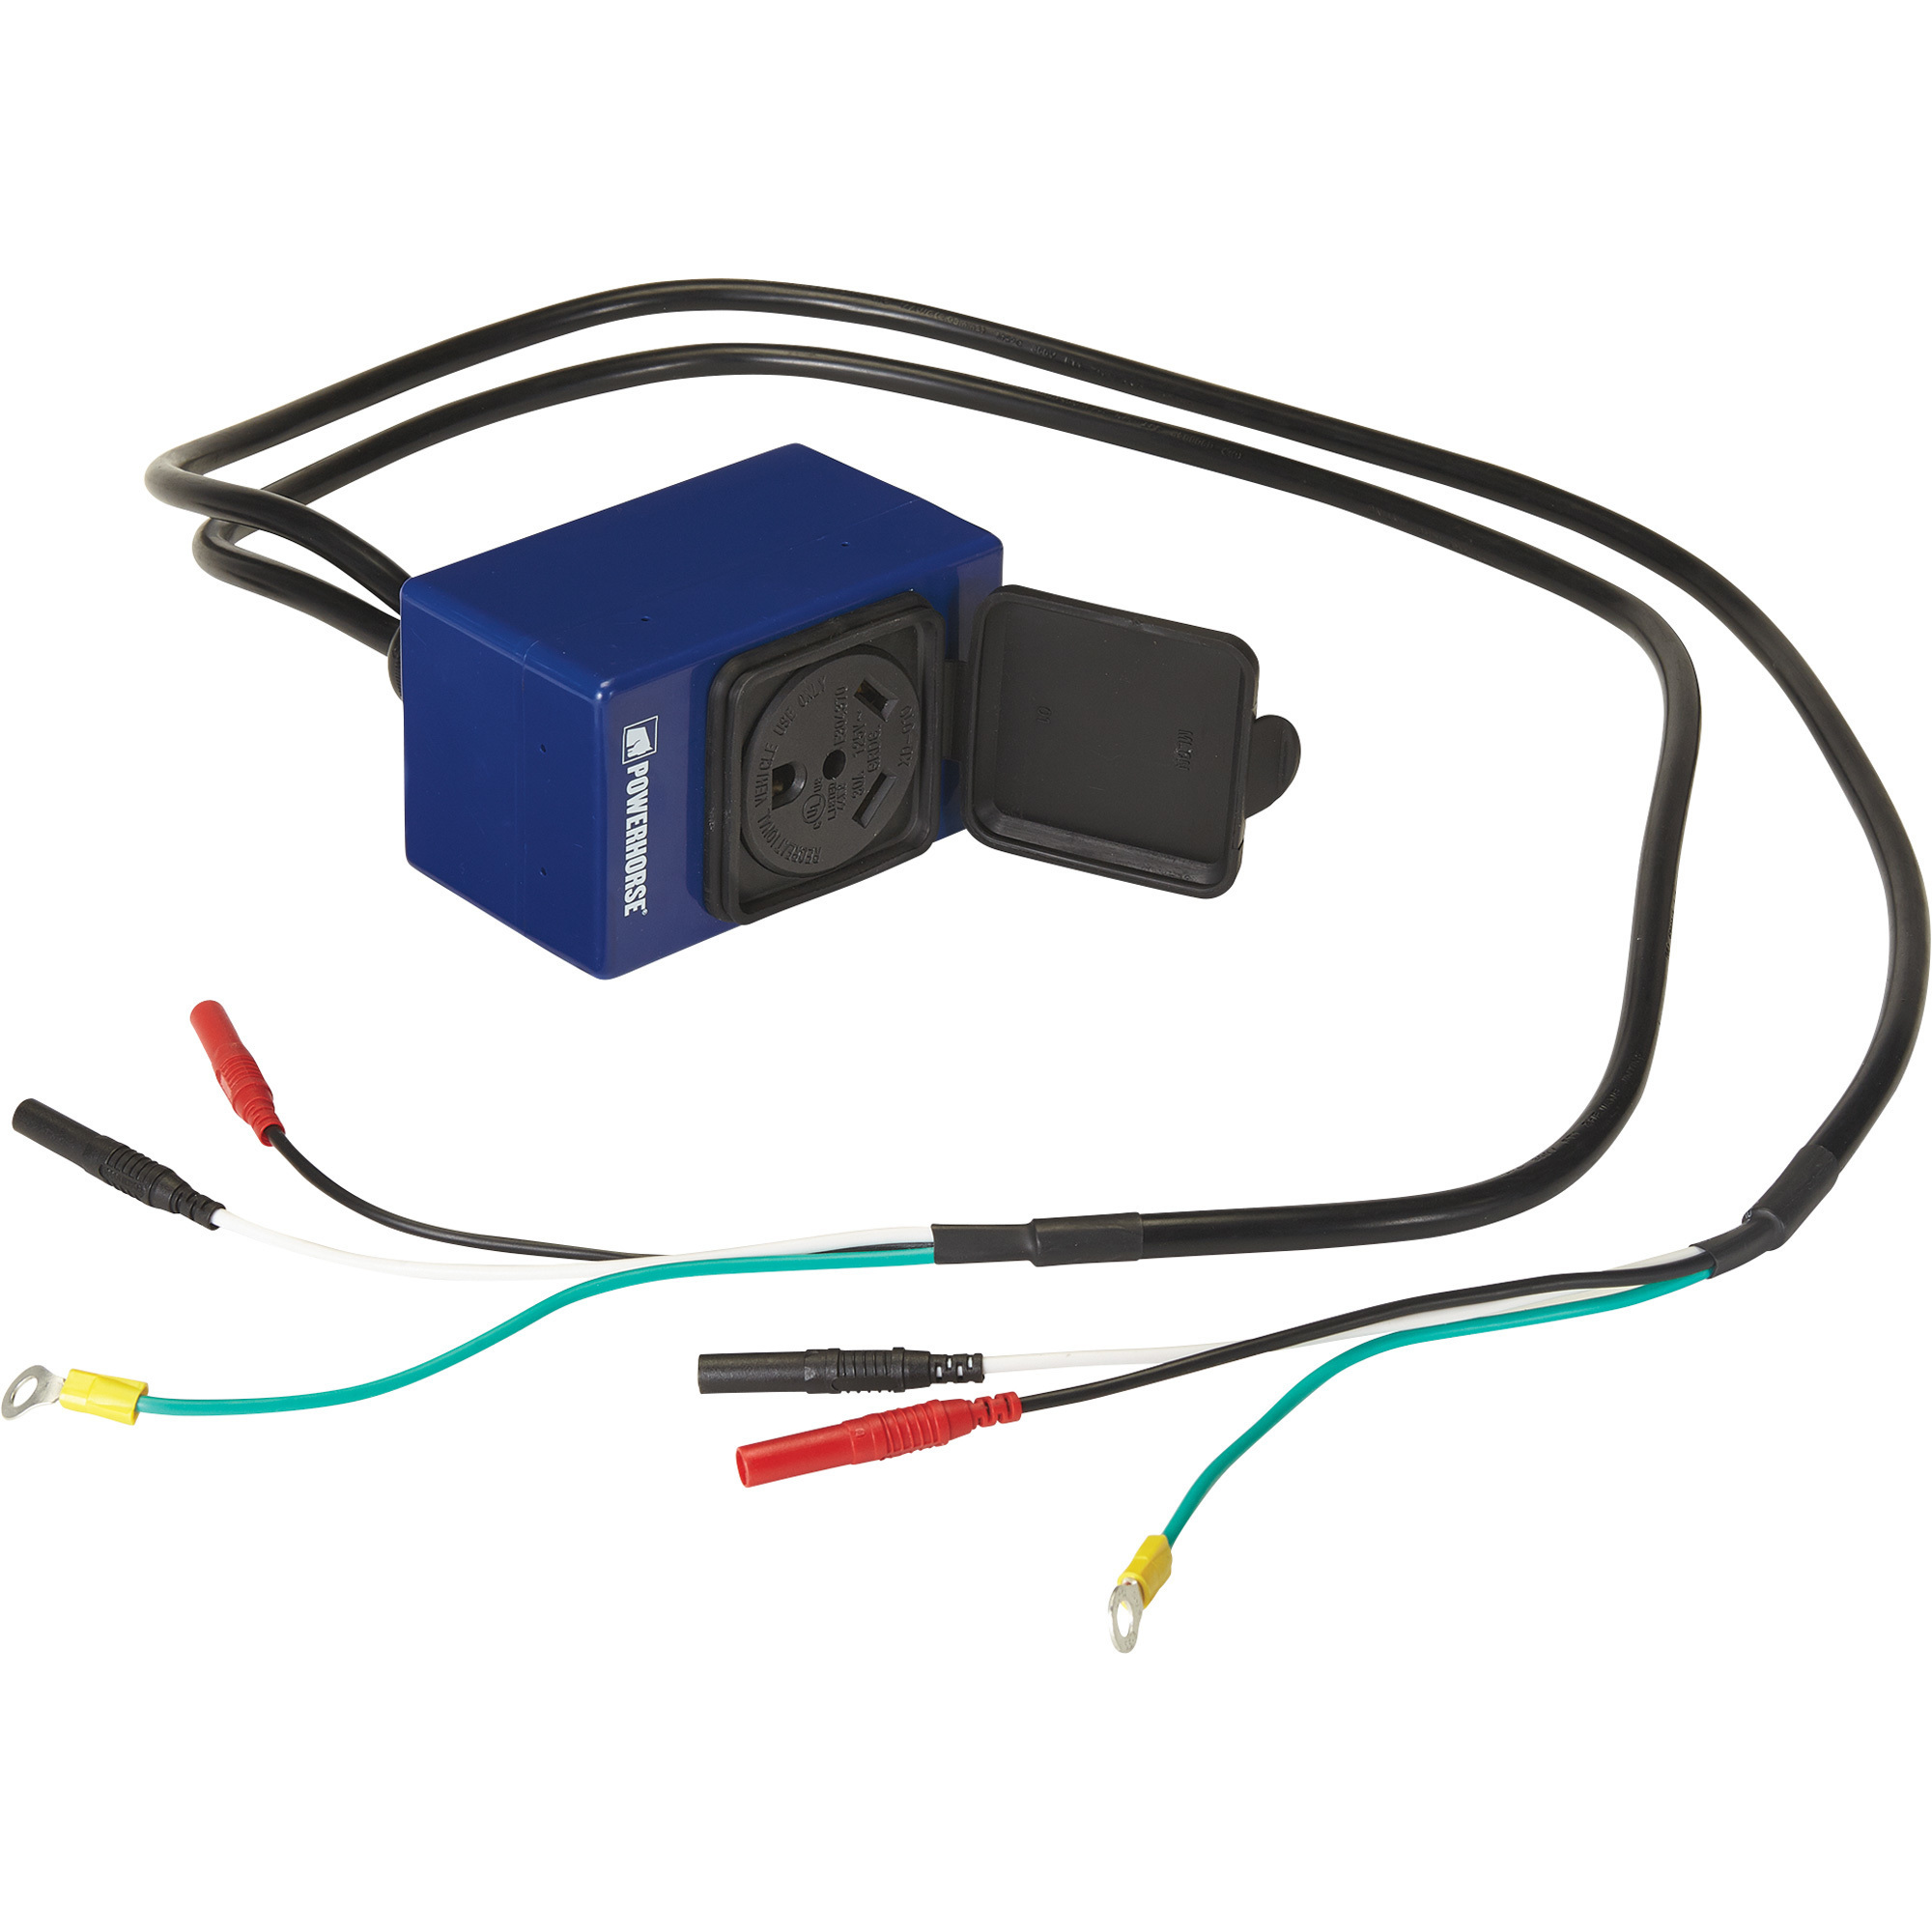 Powerhorse Parallel Cable Kit, Connects 2000 Watt or 2300 Watt Inverter Generators, Model DPC-003